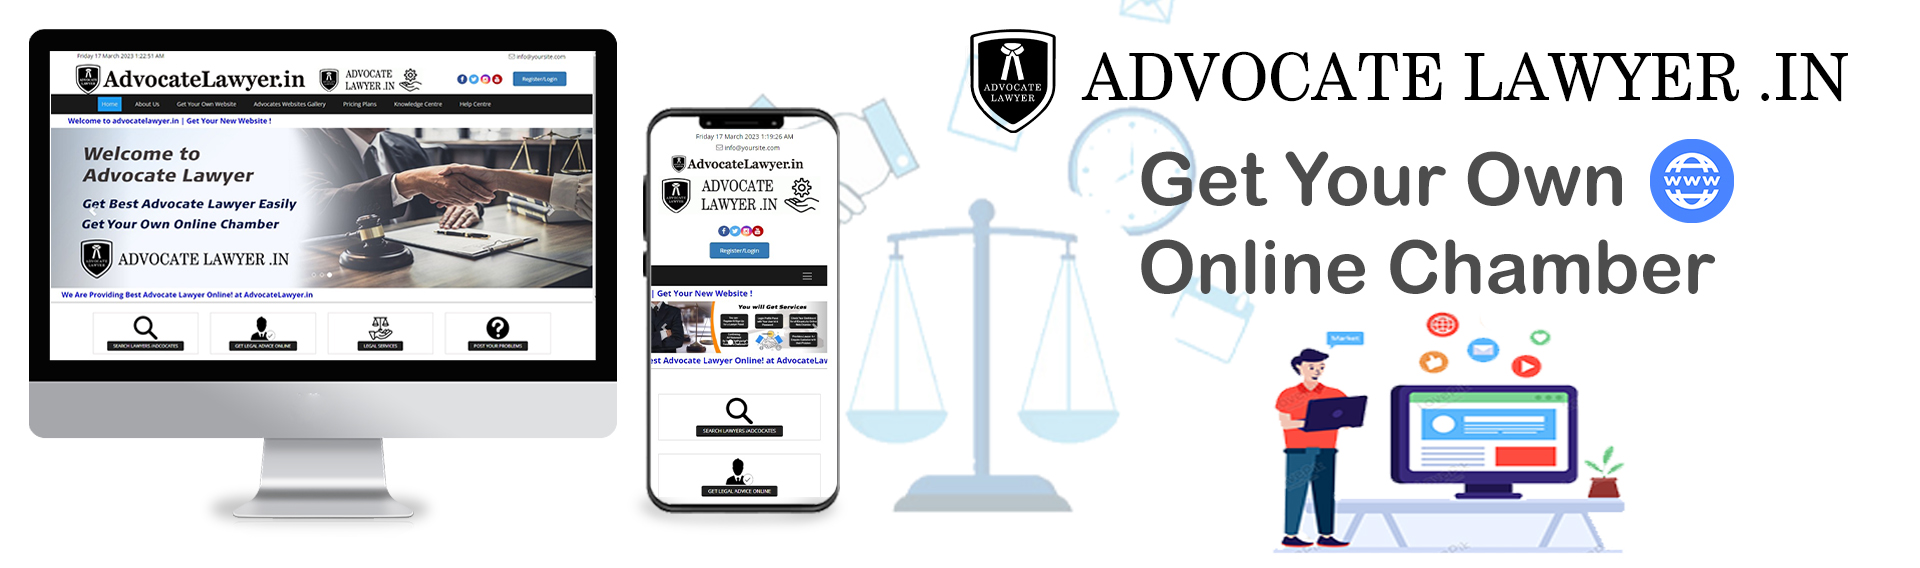 Advocate Lawyer